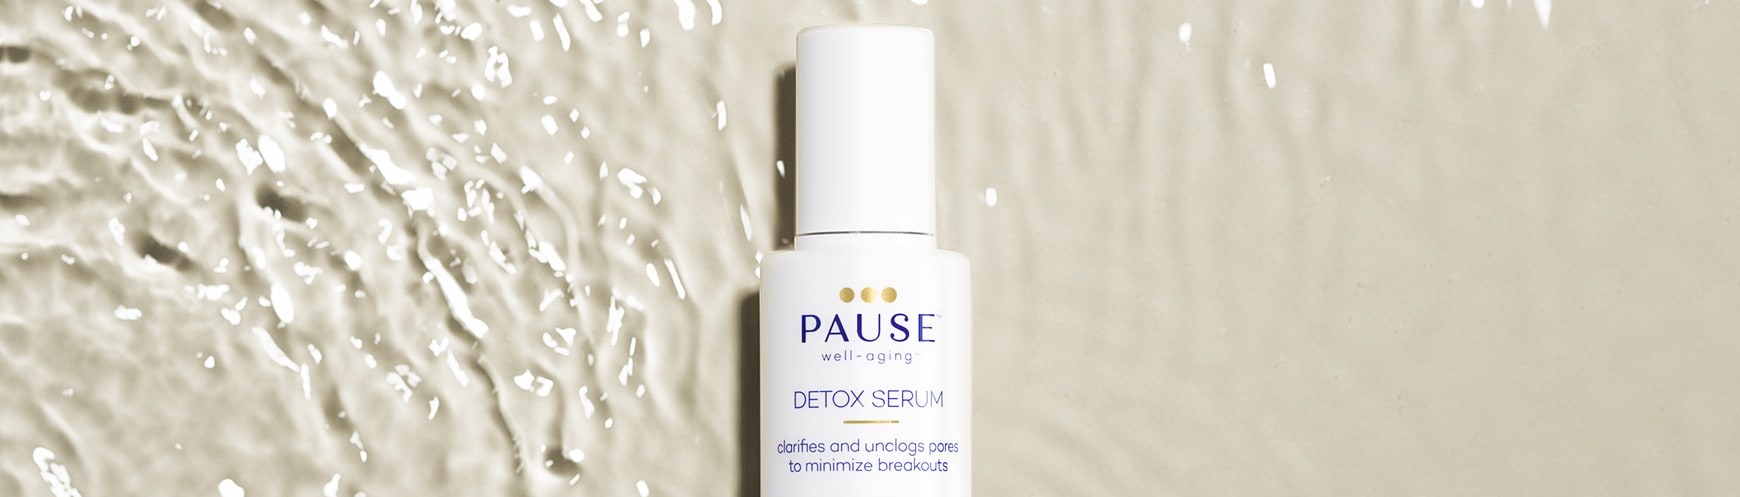 pause well-aging detox serum bottle lying in rippling water